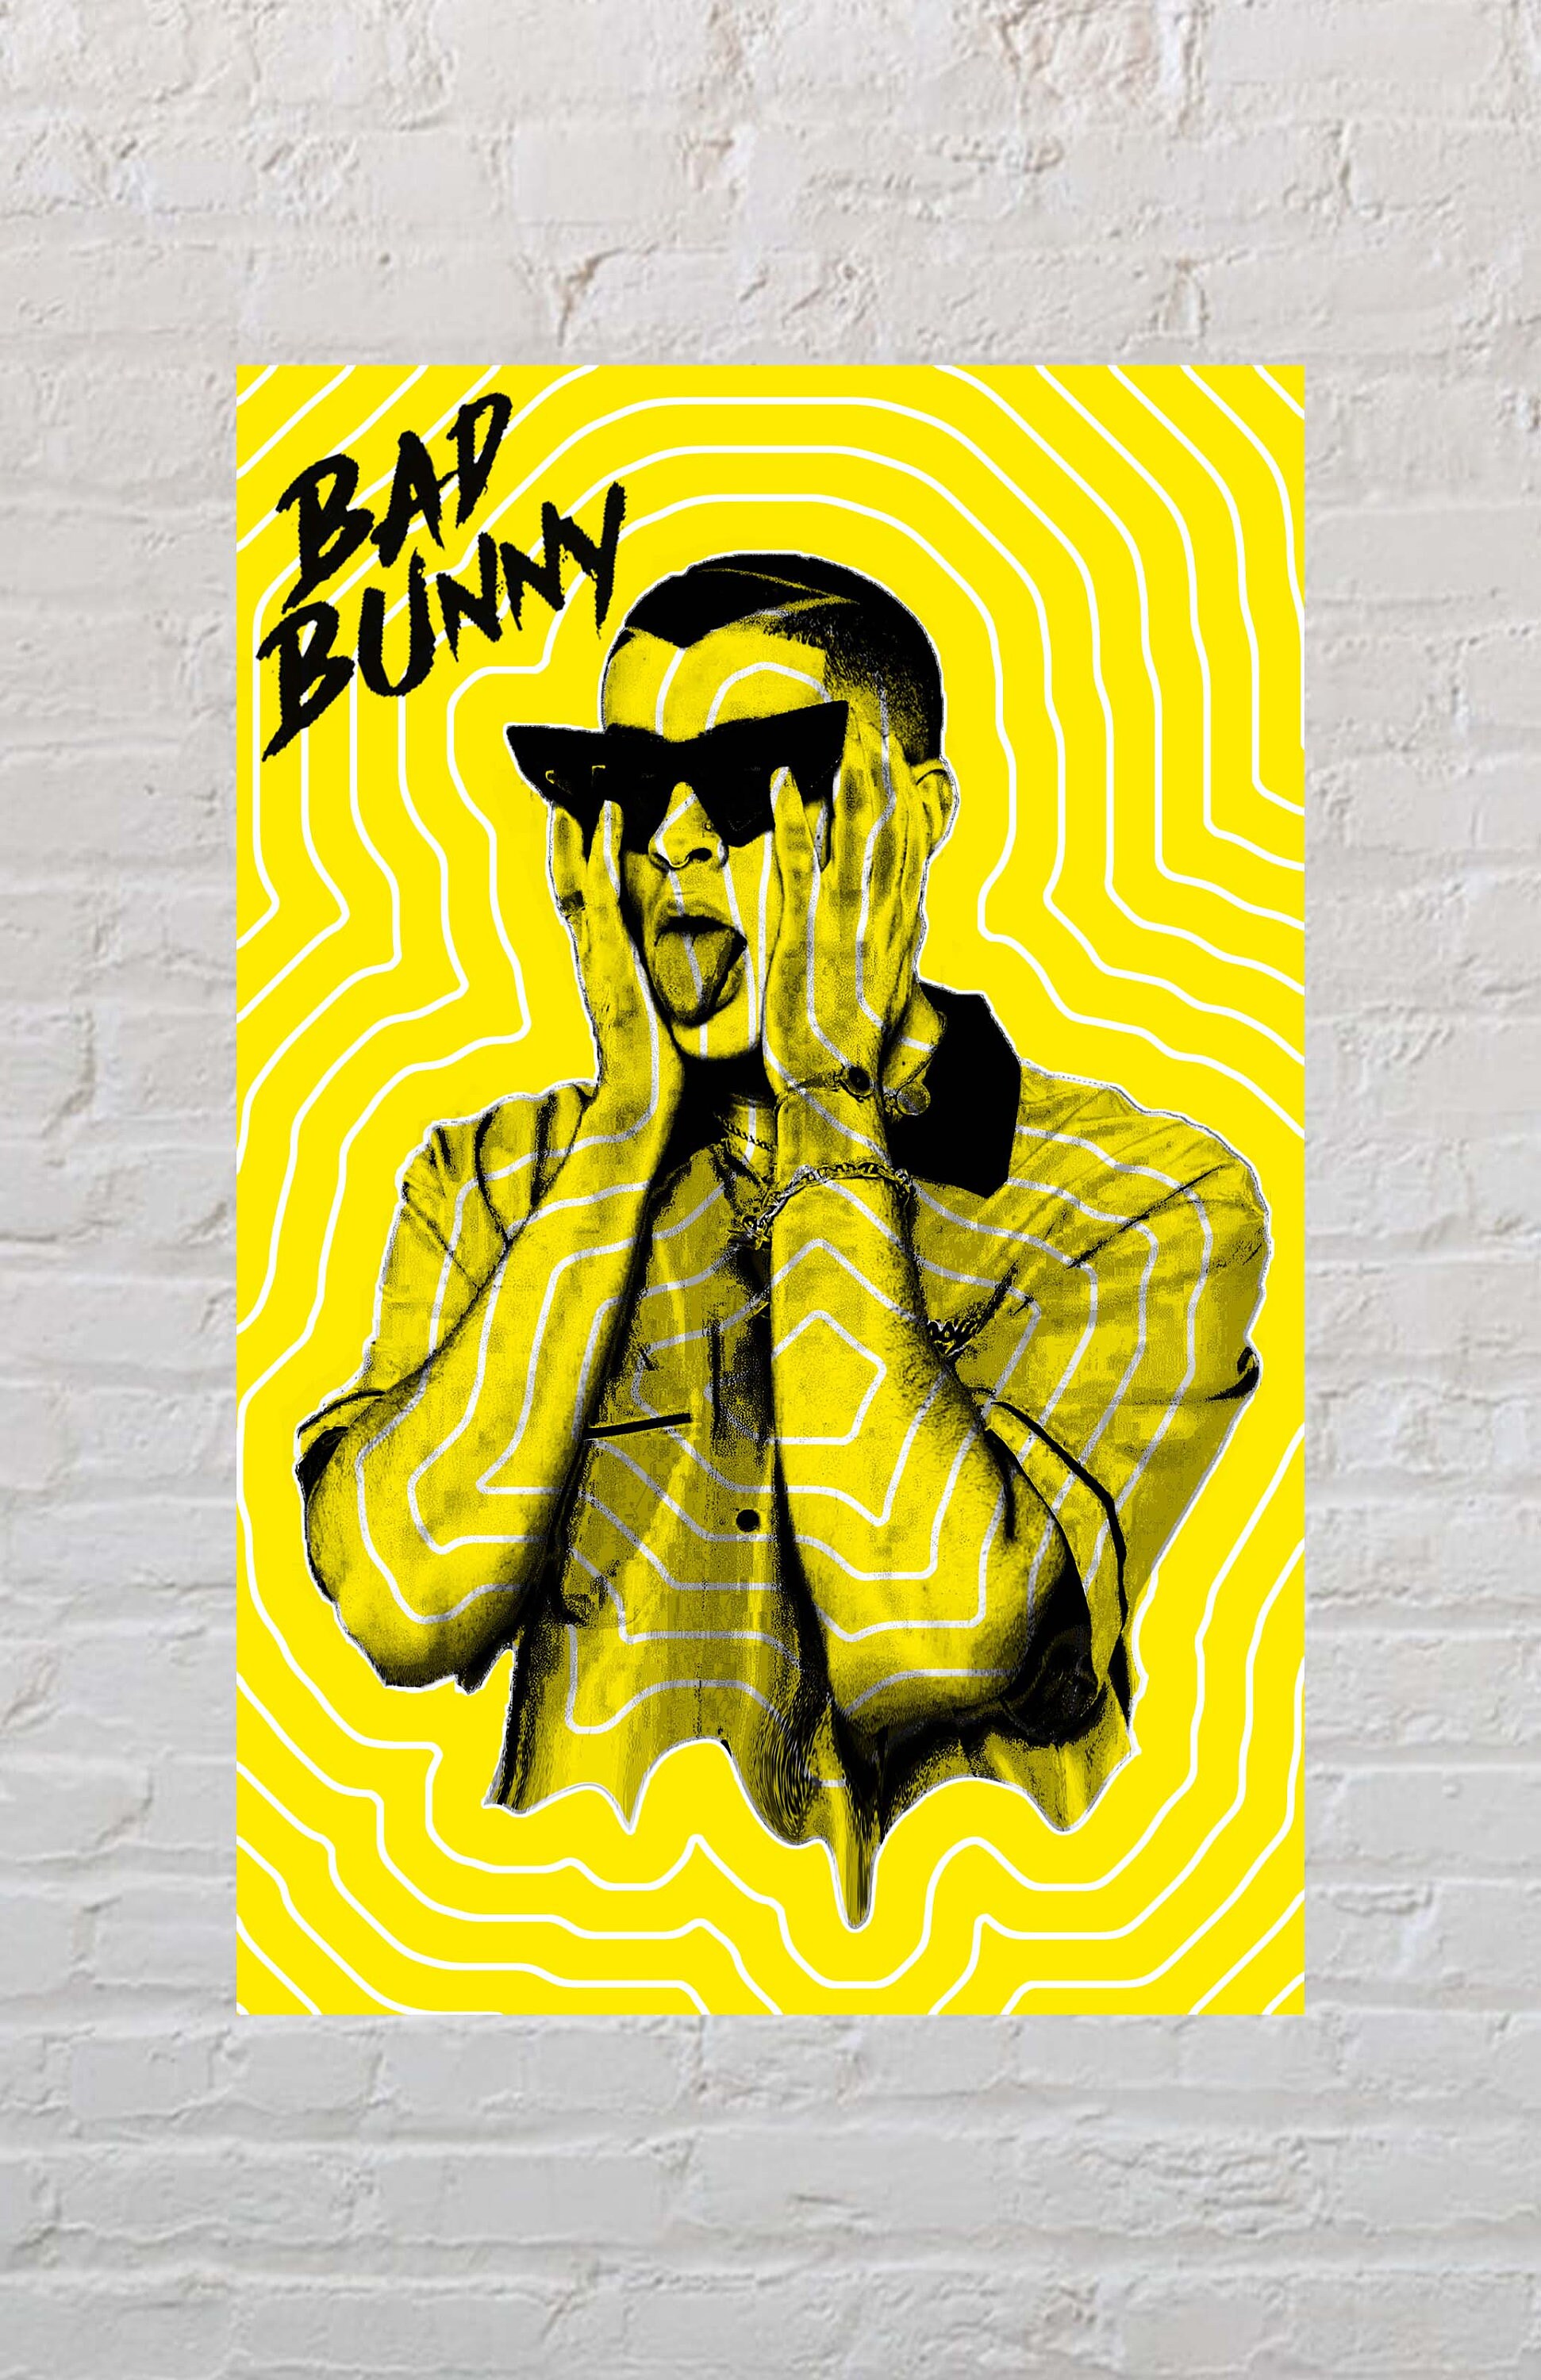 2022 New Album Un Verano Sin Ti Bad Bunny Poster Canvas - Jolly Family Gifts